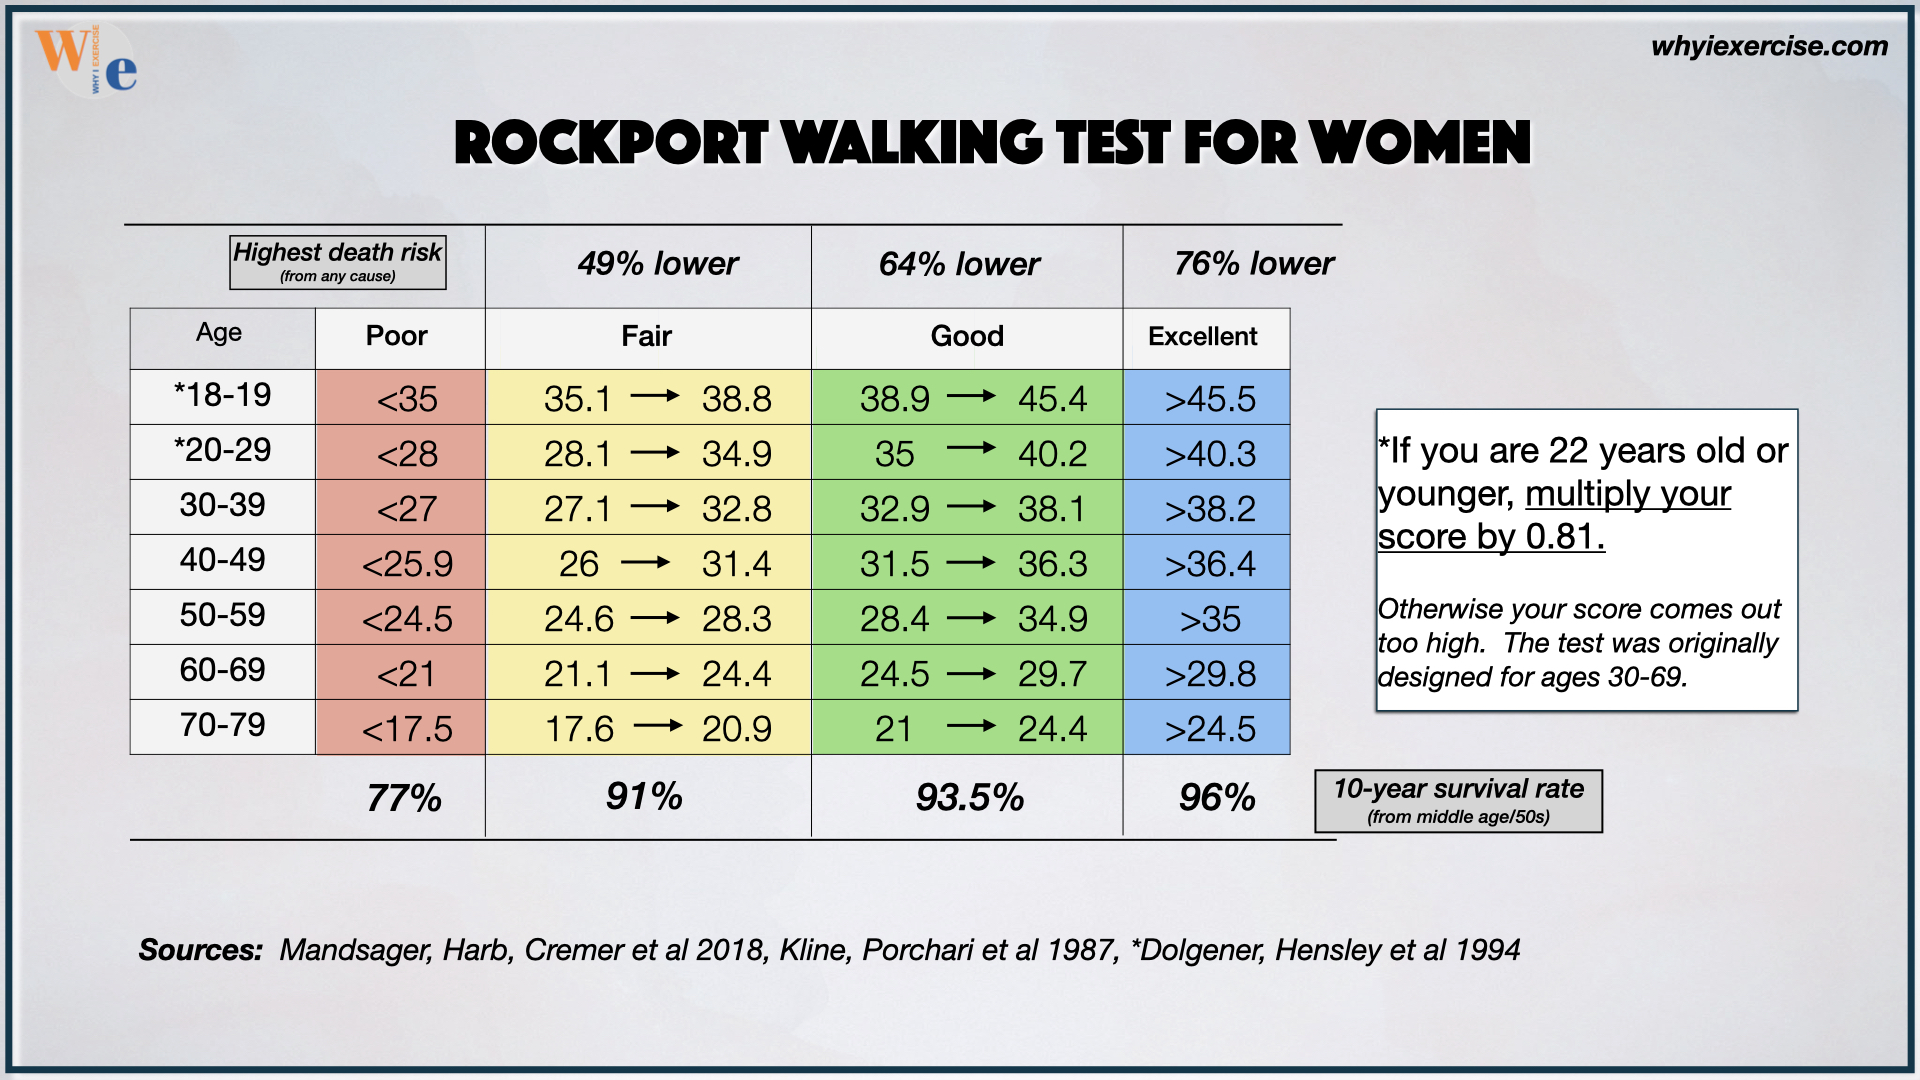 Rockport walking test age group score chart for women